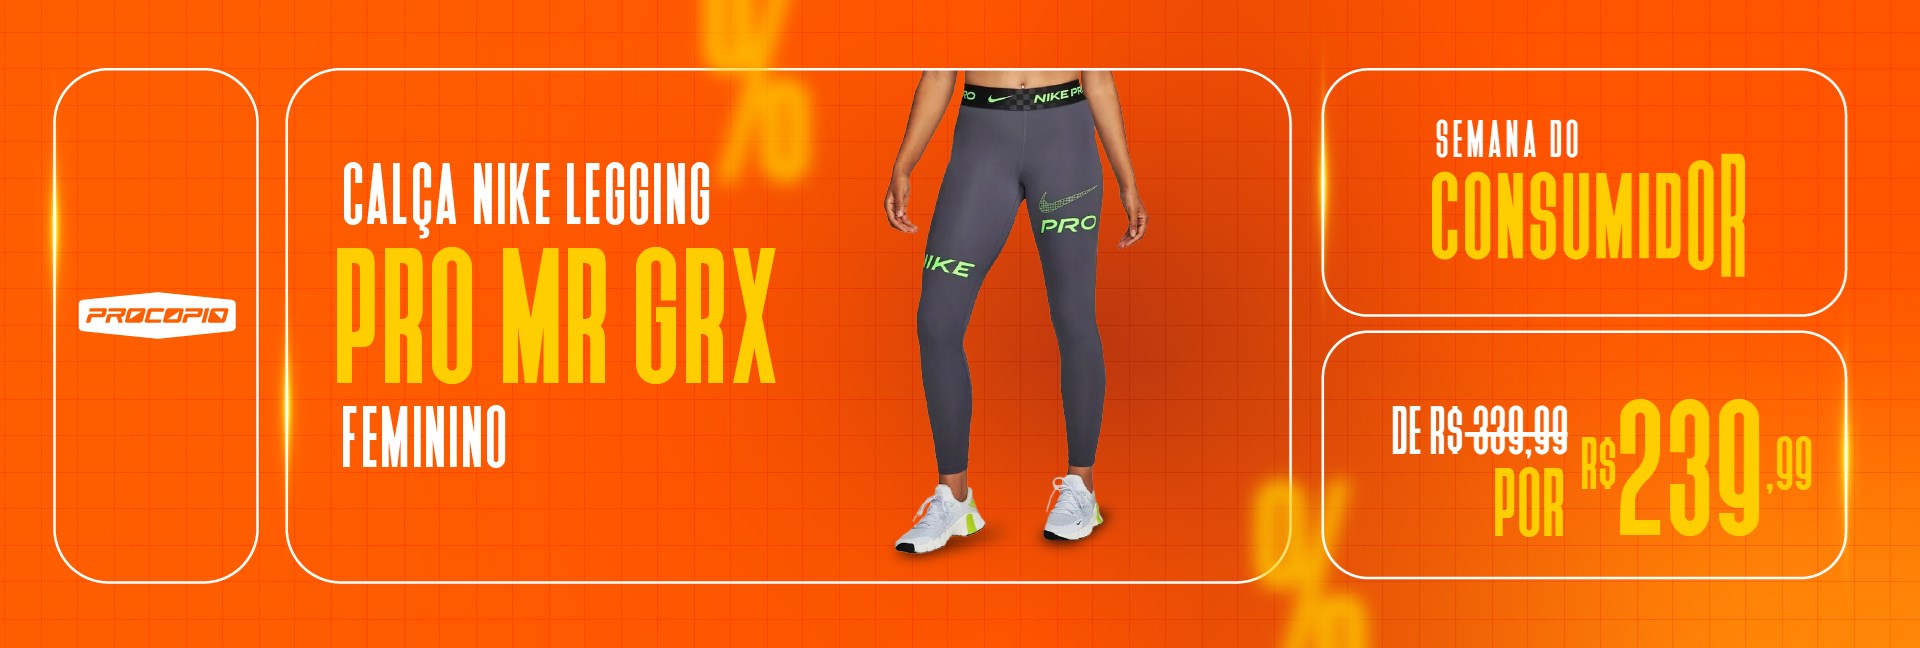 Calça Nike Legging Pro MR GRX